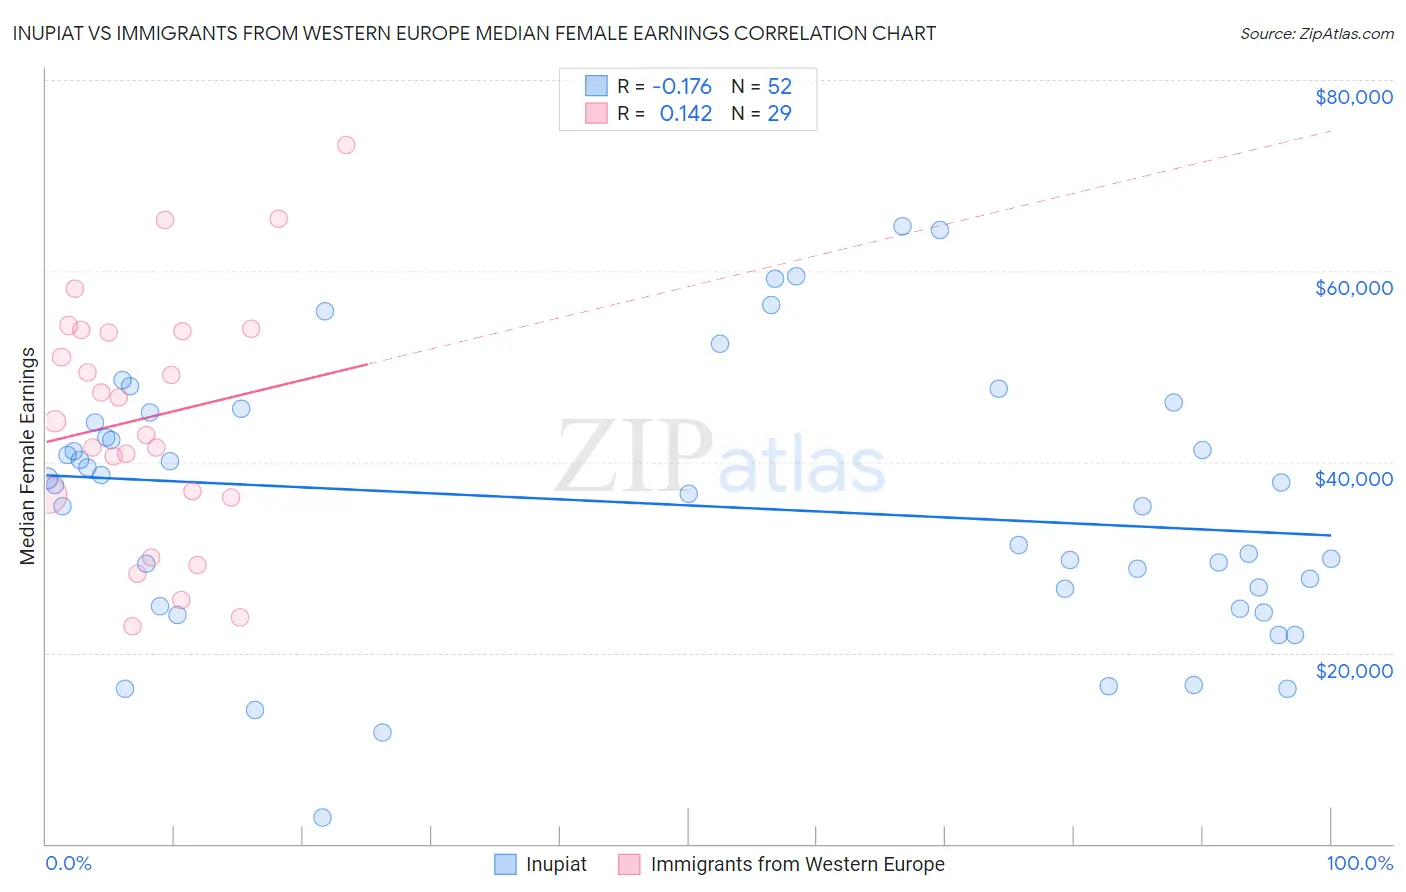 Inupiat vs Immigrants from Western Europe Median Female Earnings